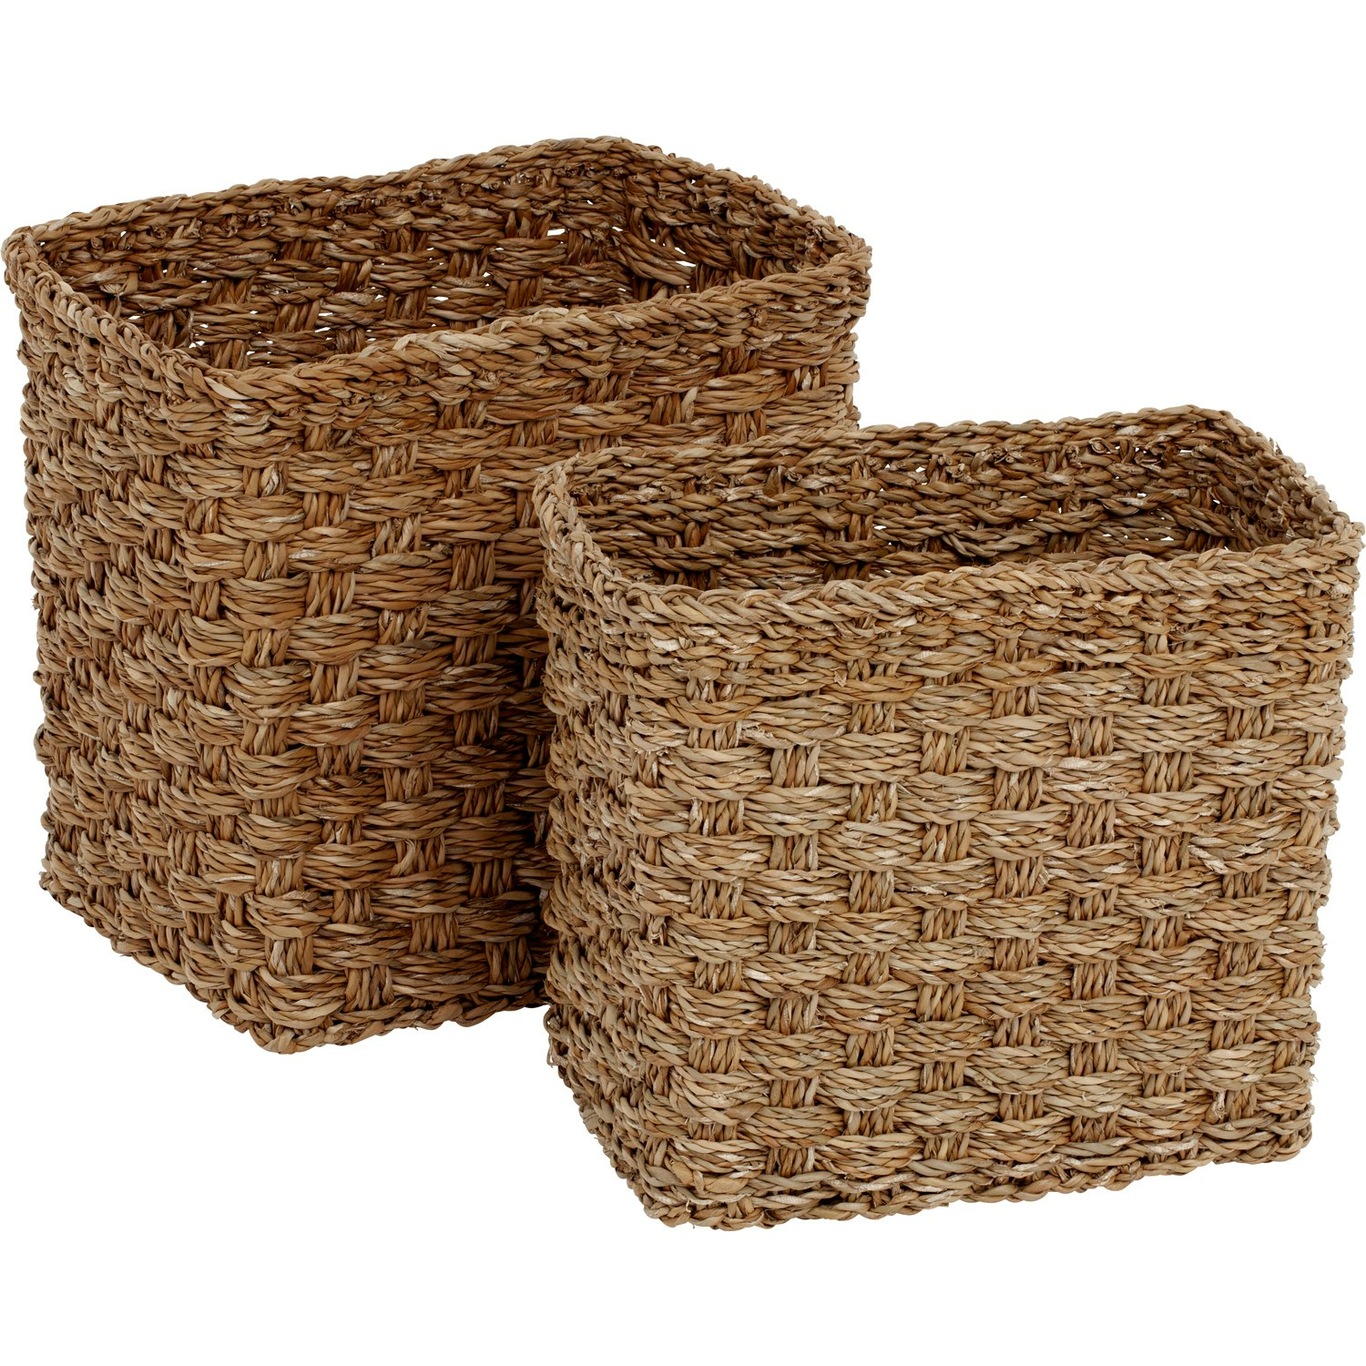 https://royaldesign.com/image/2/dixie-esther-baskets-natural-2-pack-0?w=800&quality=80